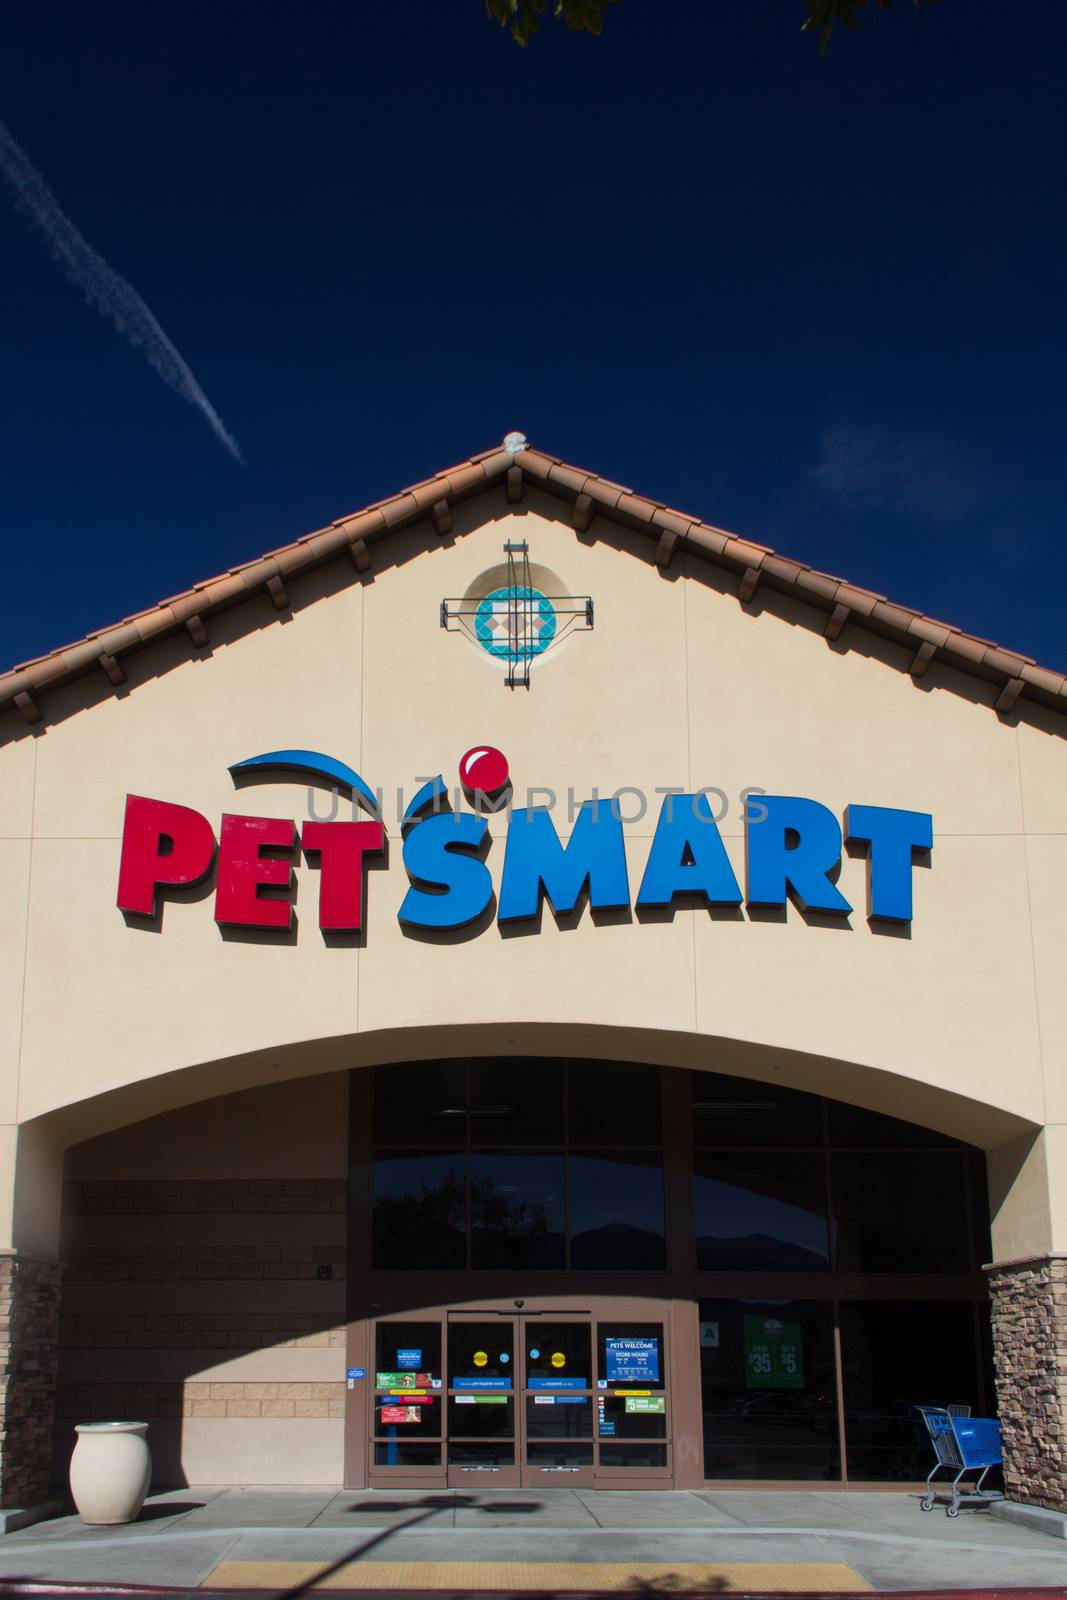 SANTA CLARITA, CA/USA - NOVEMBER 22, 2014  Exterior view PetSmart store. PetSmart, Inc. is a retail specialty chain of pet supplies and services.